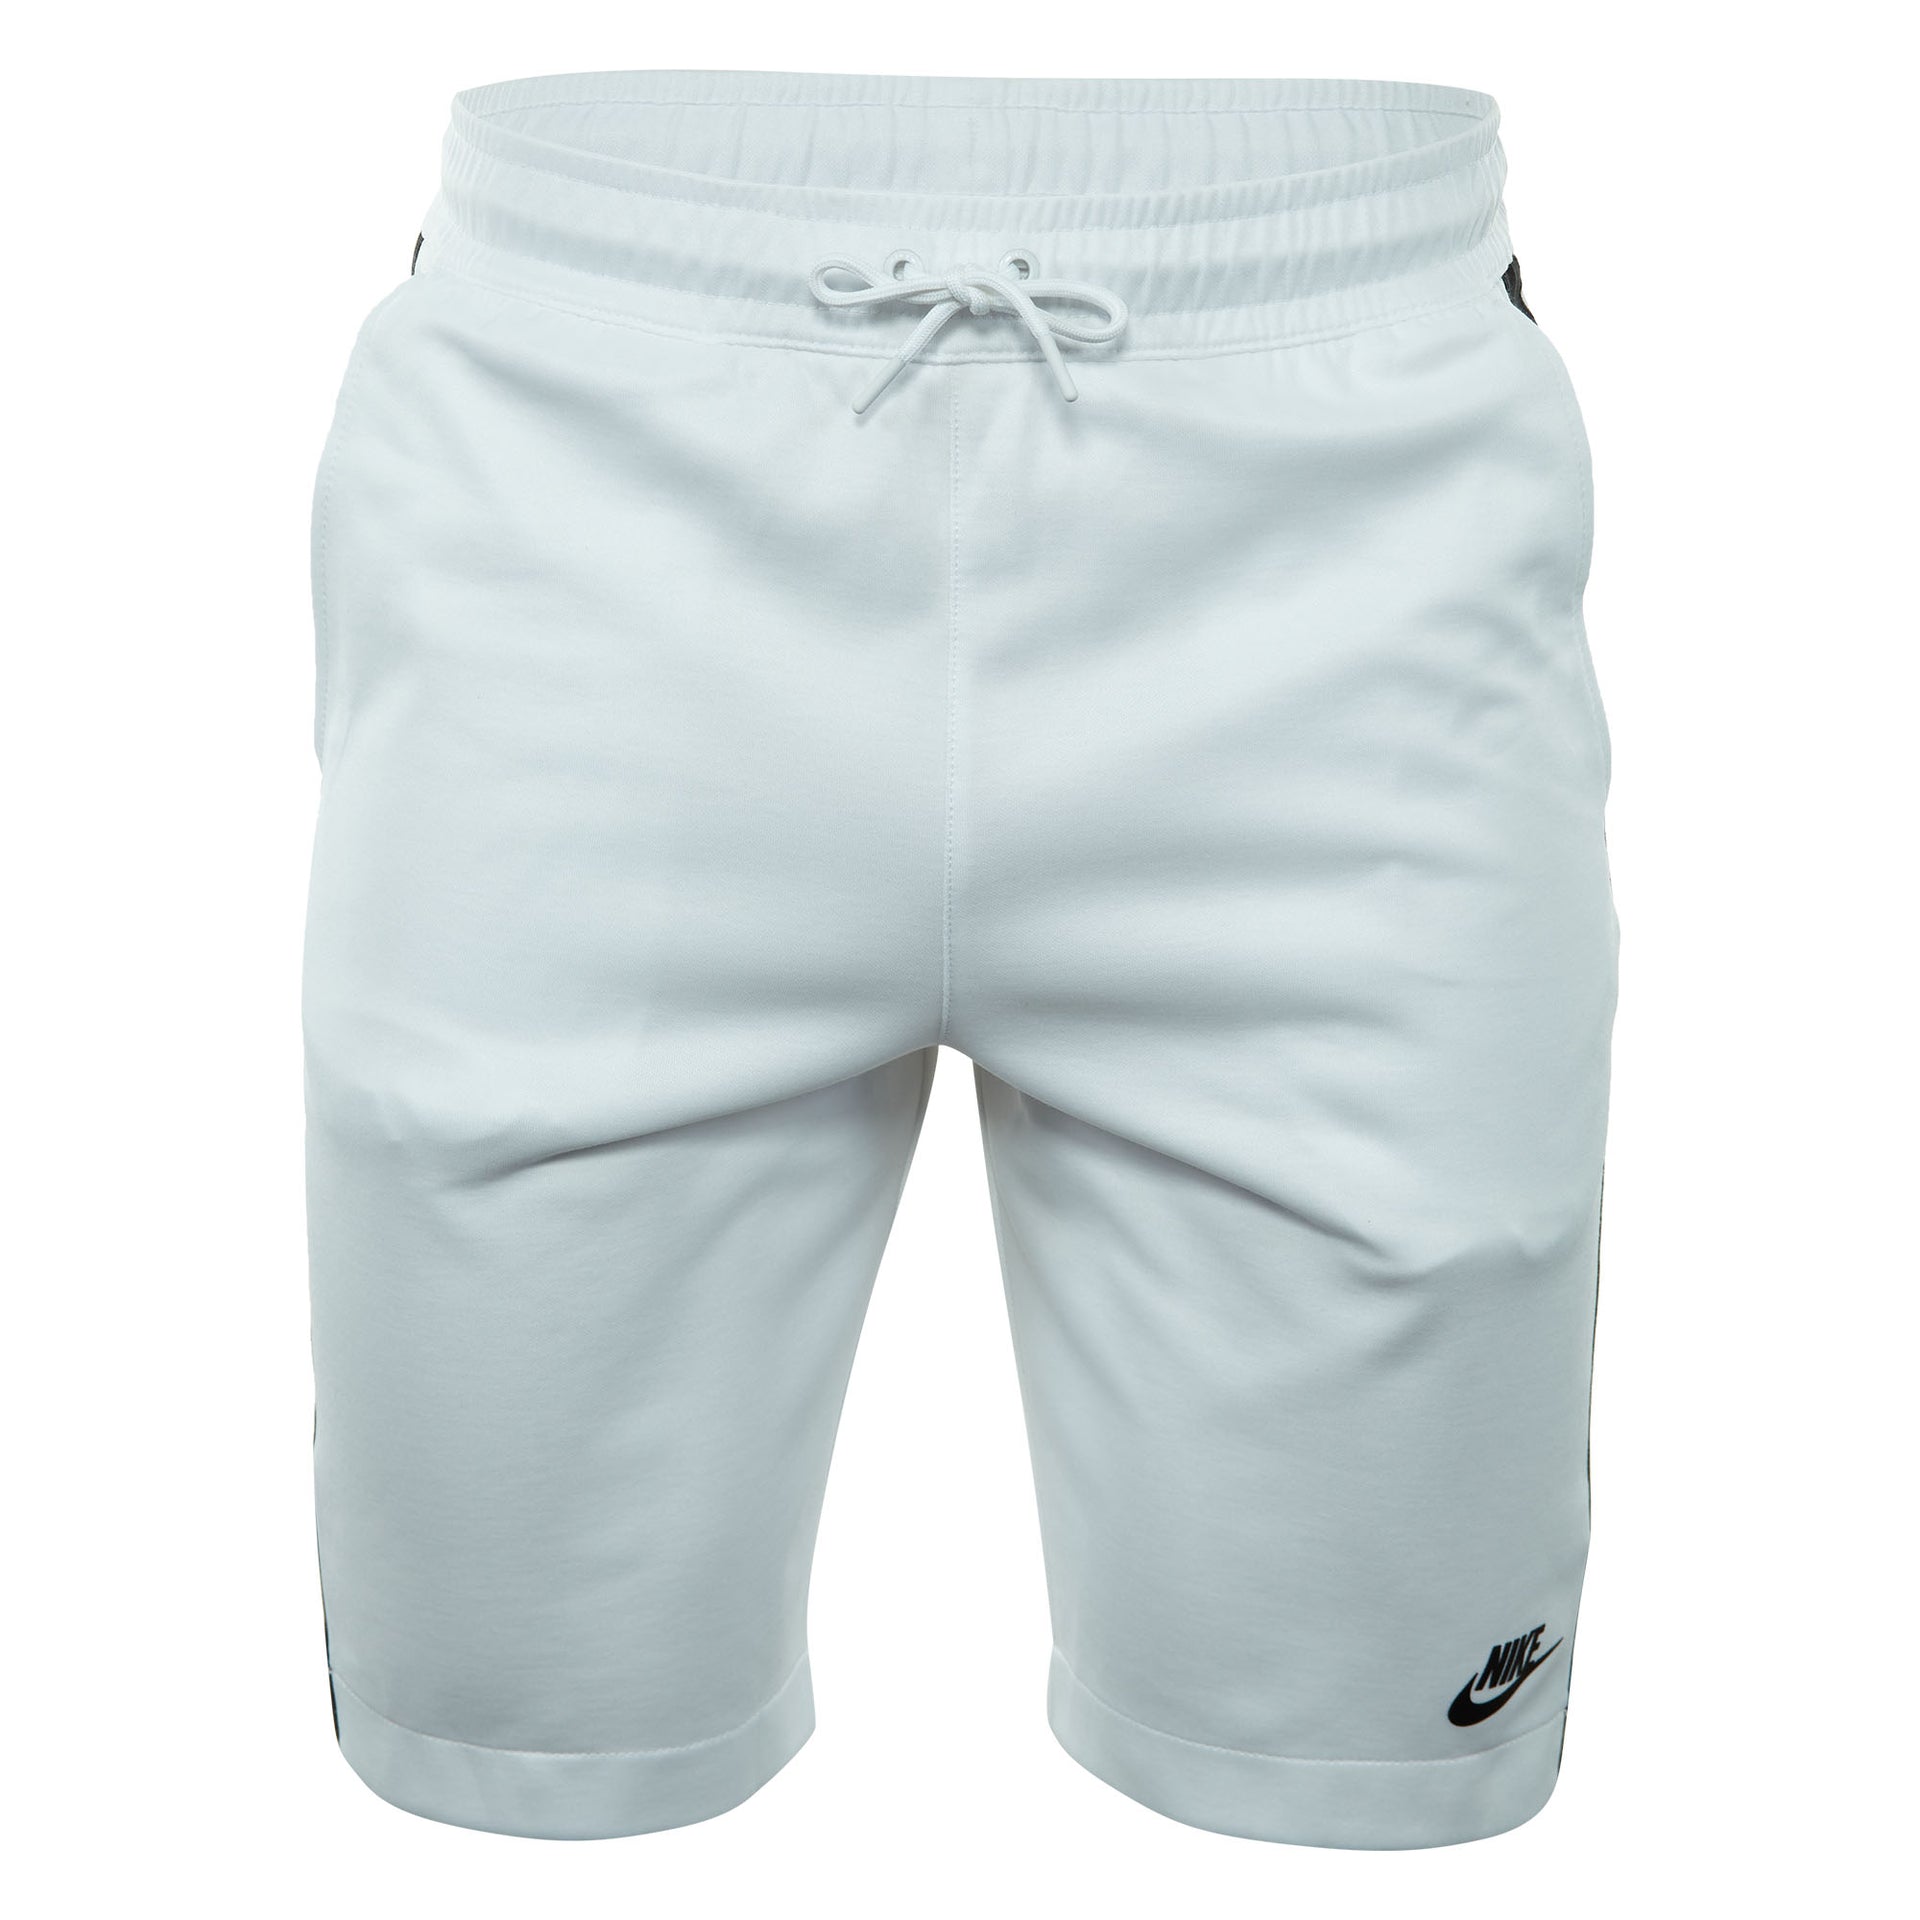 Nike Tribute Shorts Mens Style : 884902